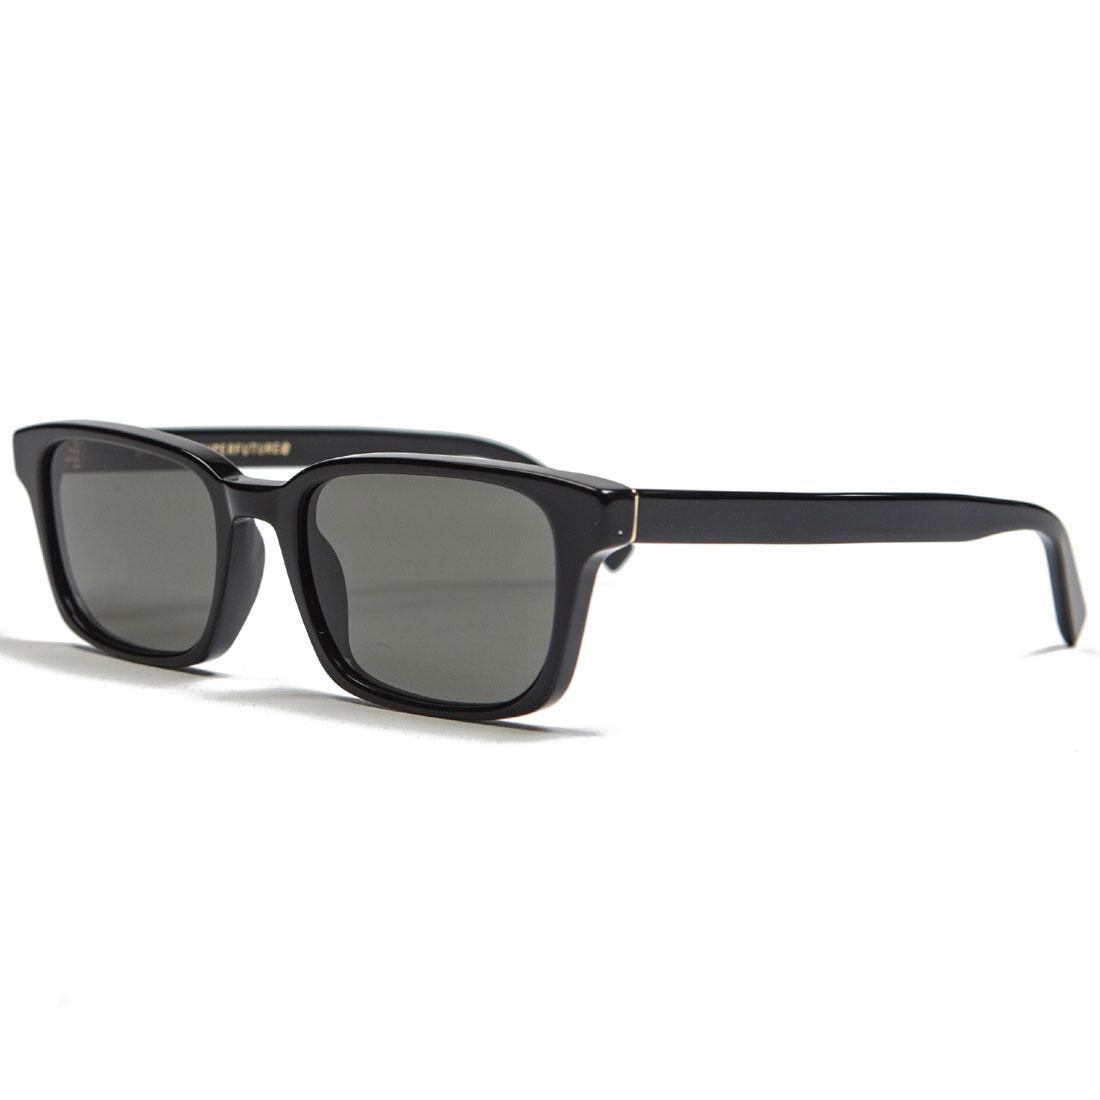 Super Sunglasses Regola Sunglasses (black)